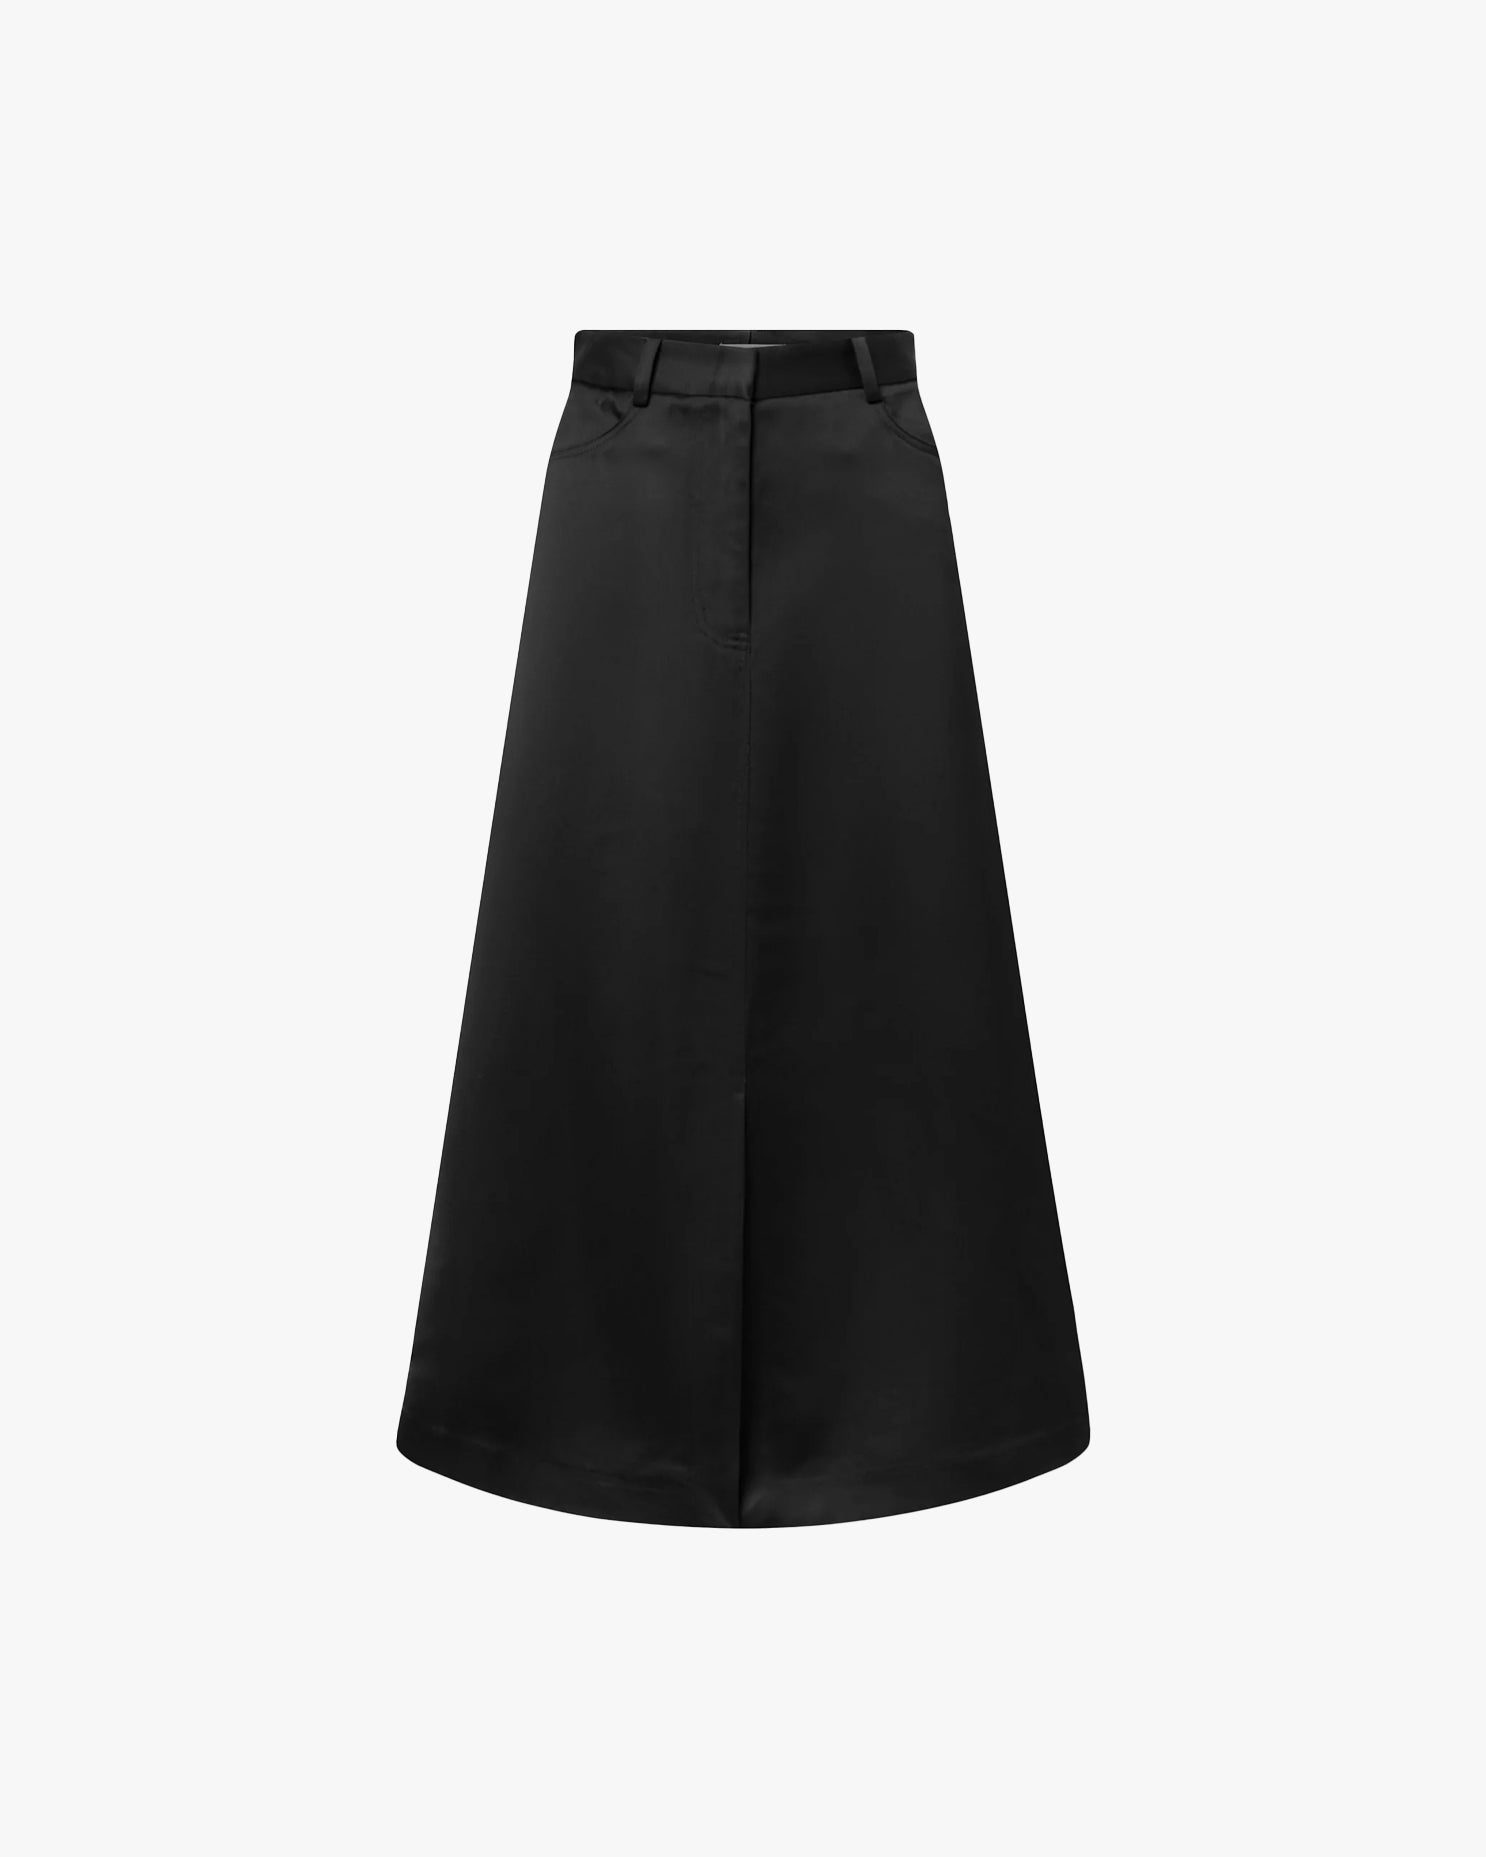 Martina Skirt in Black